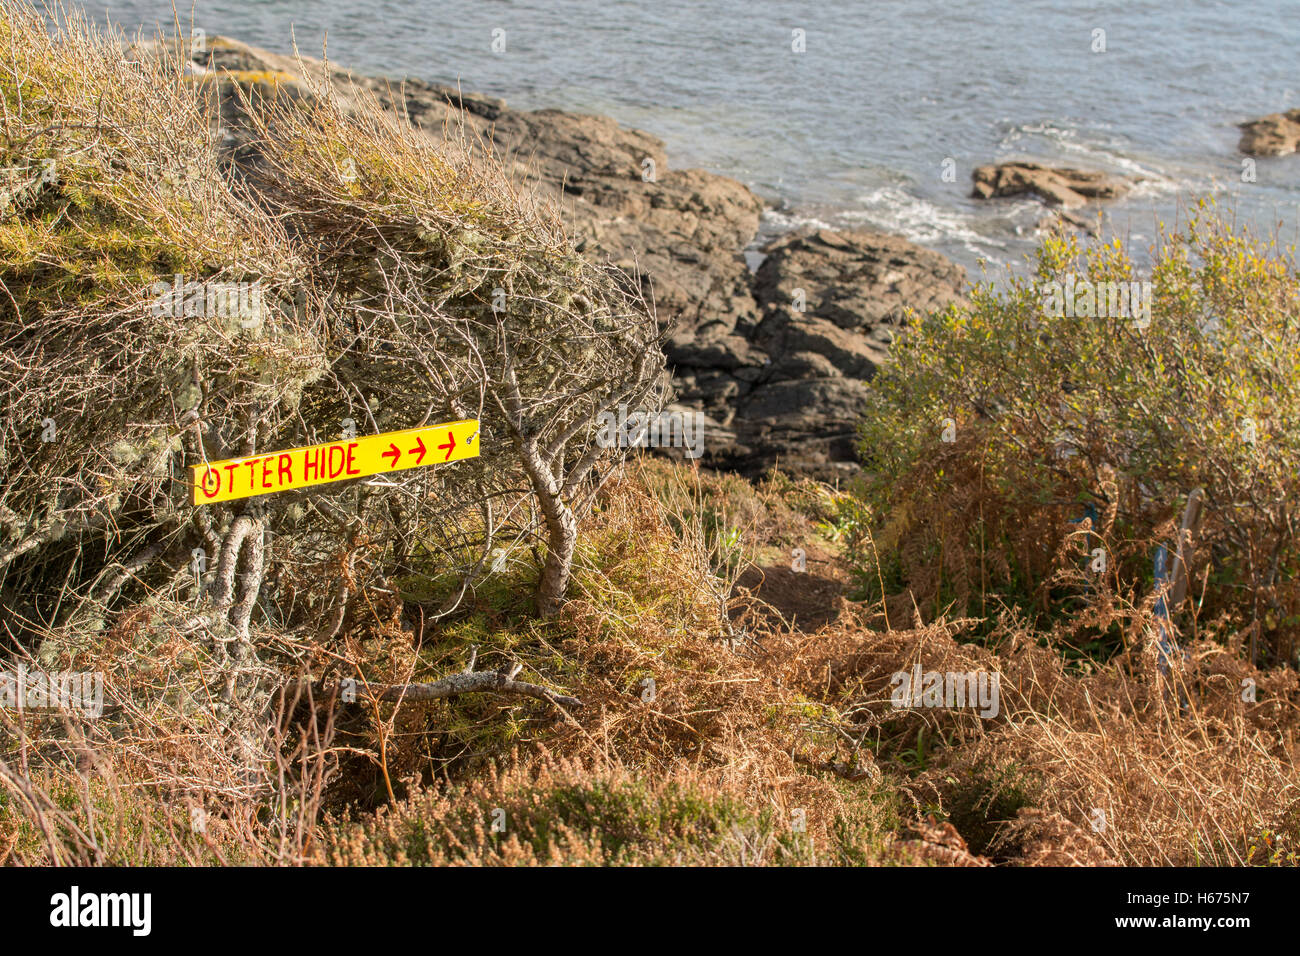 otter hide sign, Skye Forest Garden, Armadale, Isle of Skye, Scotland, UK Stock Photo